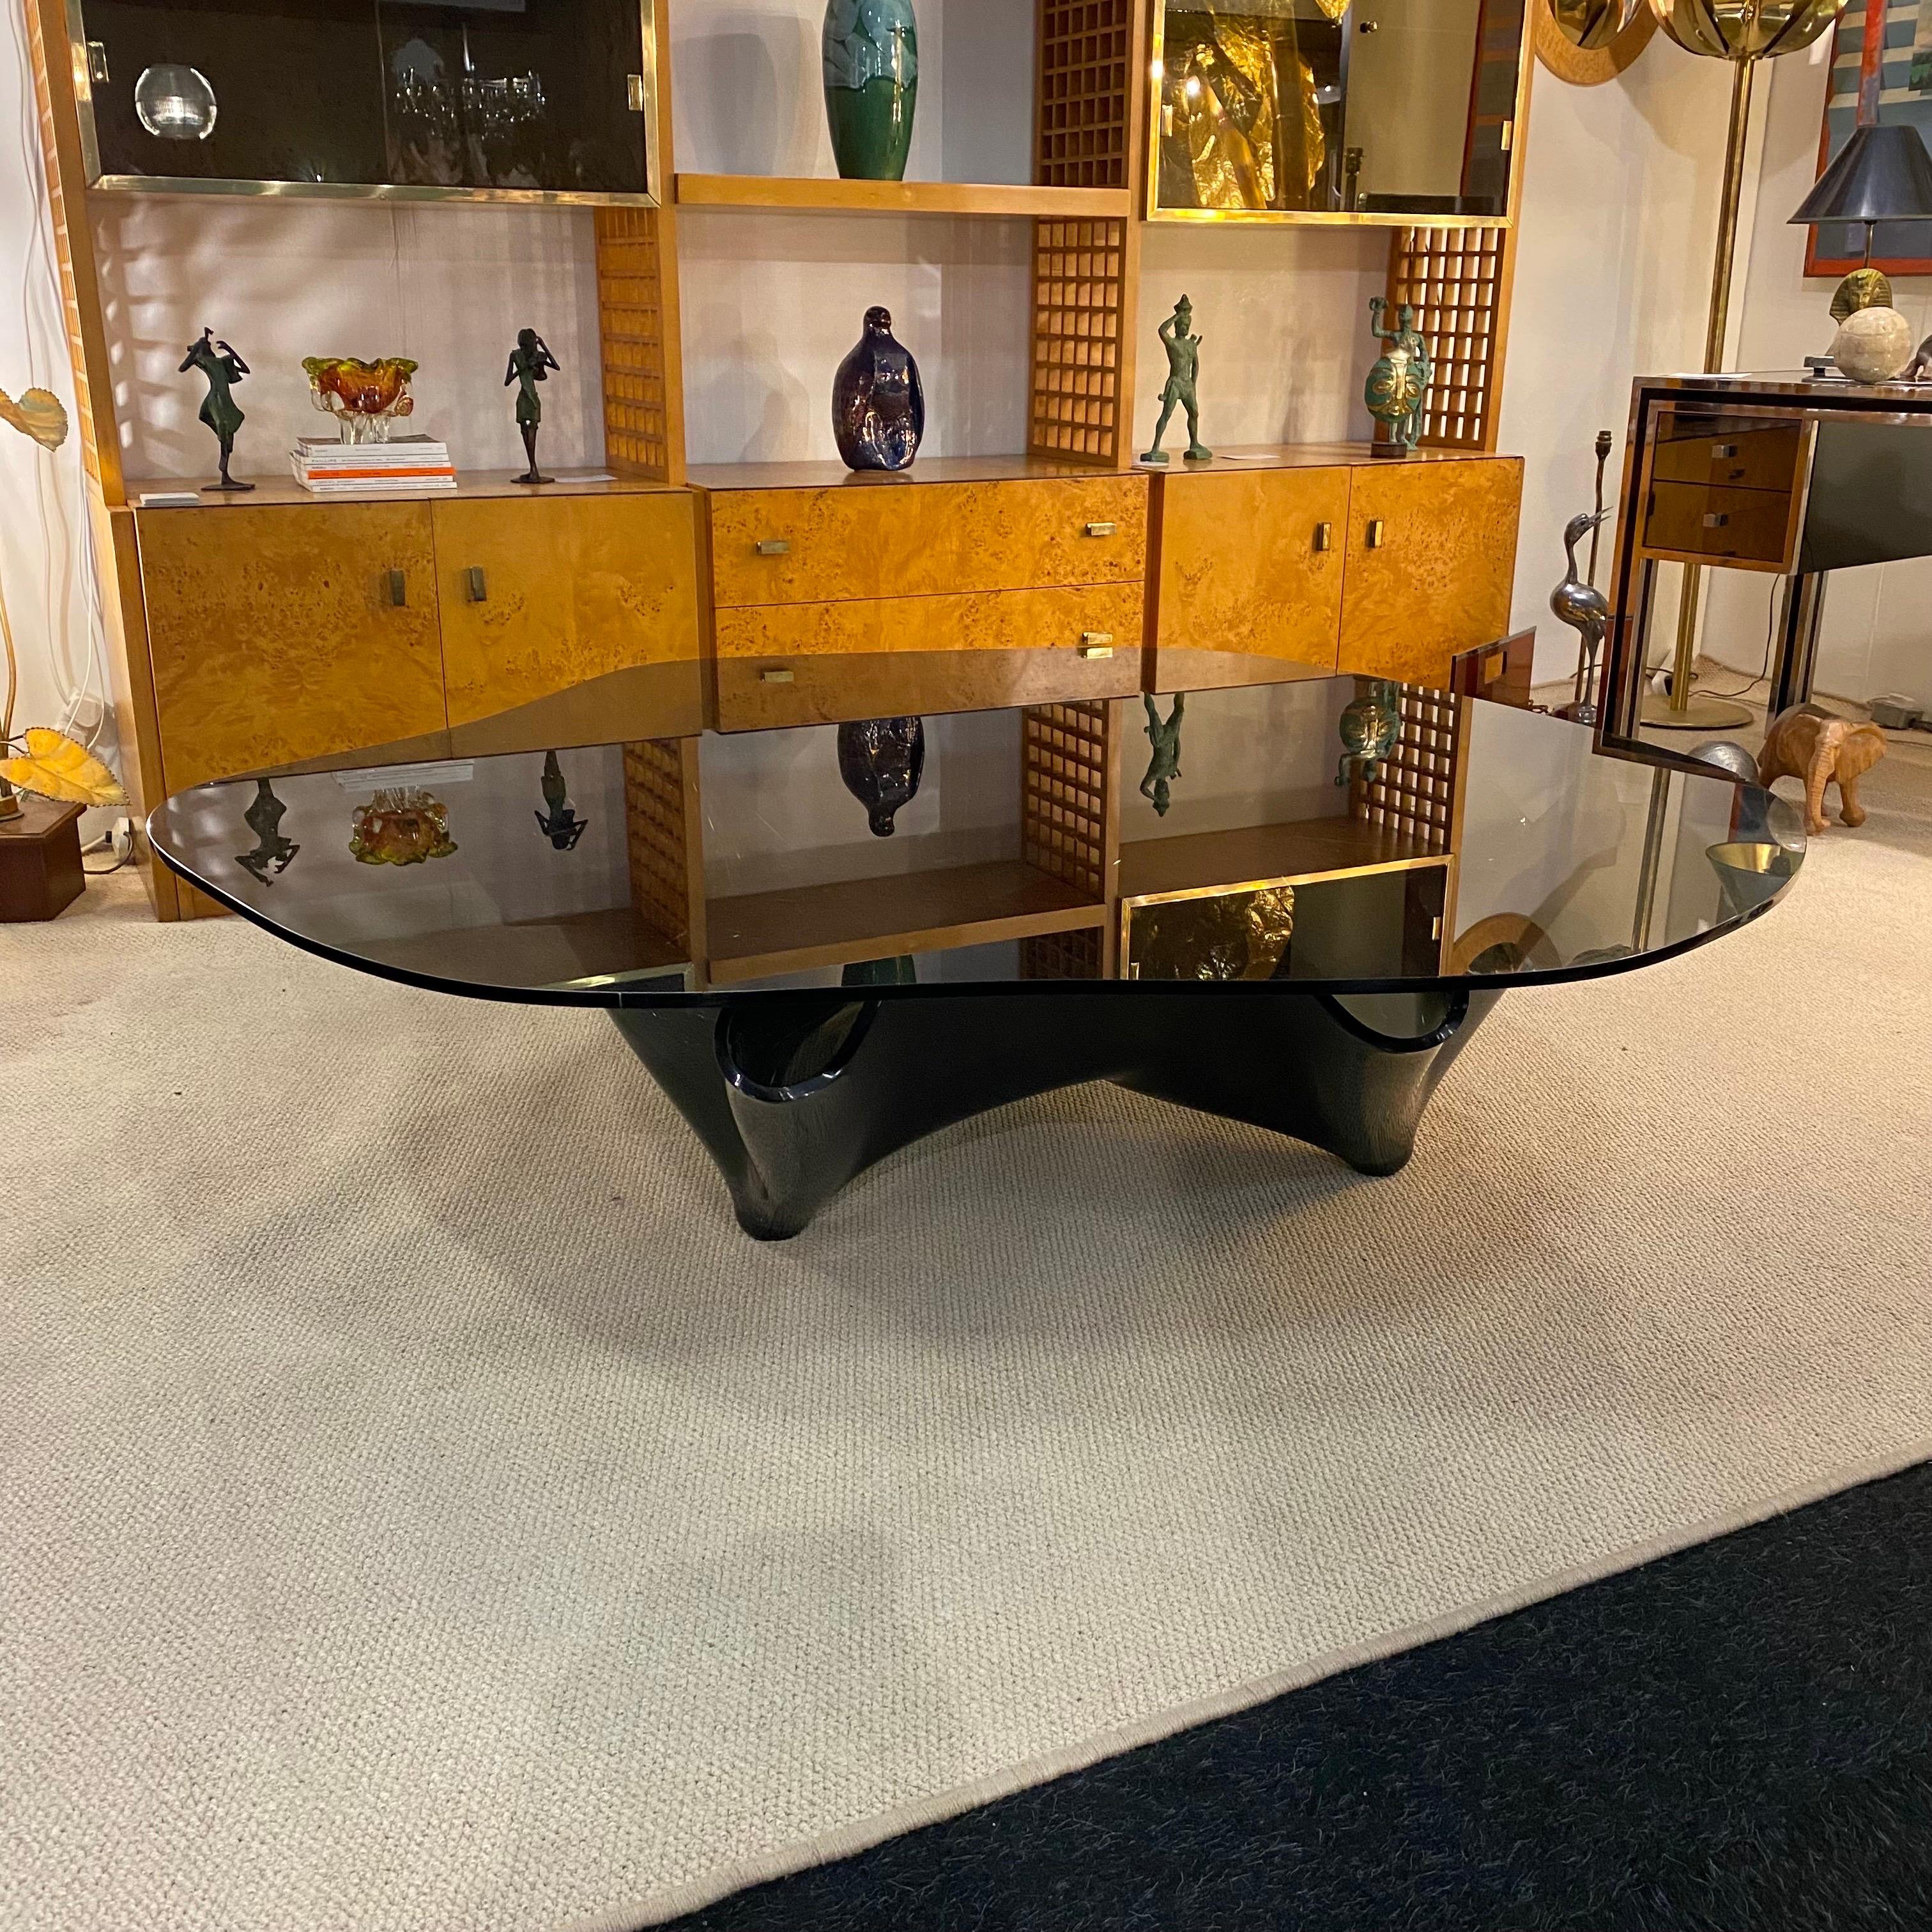 irregular shaped glass coffee table